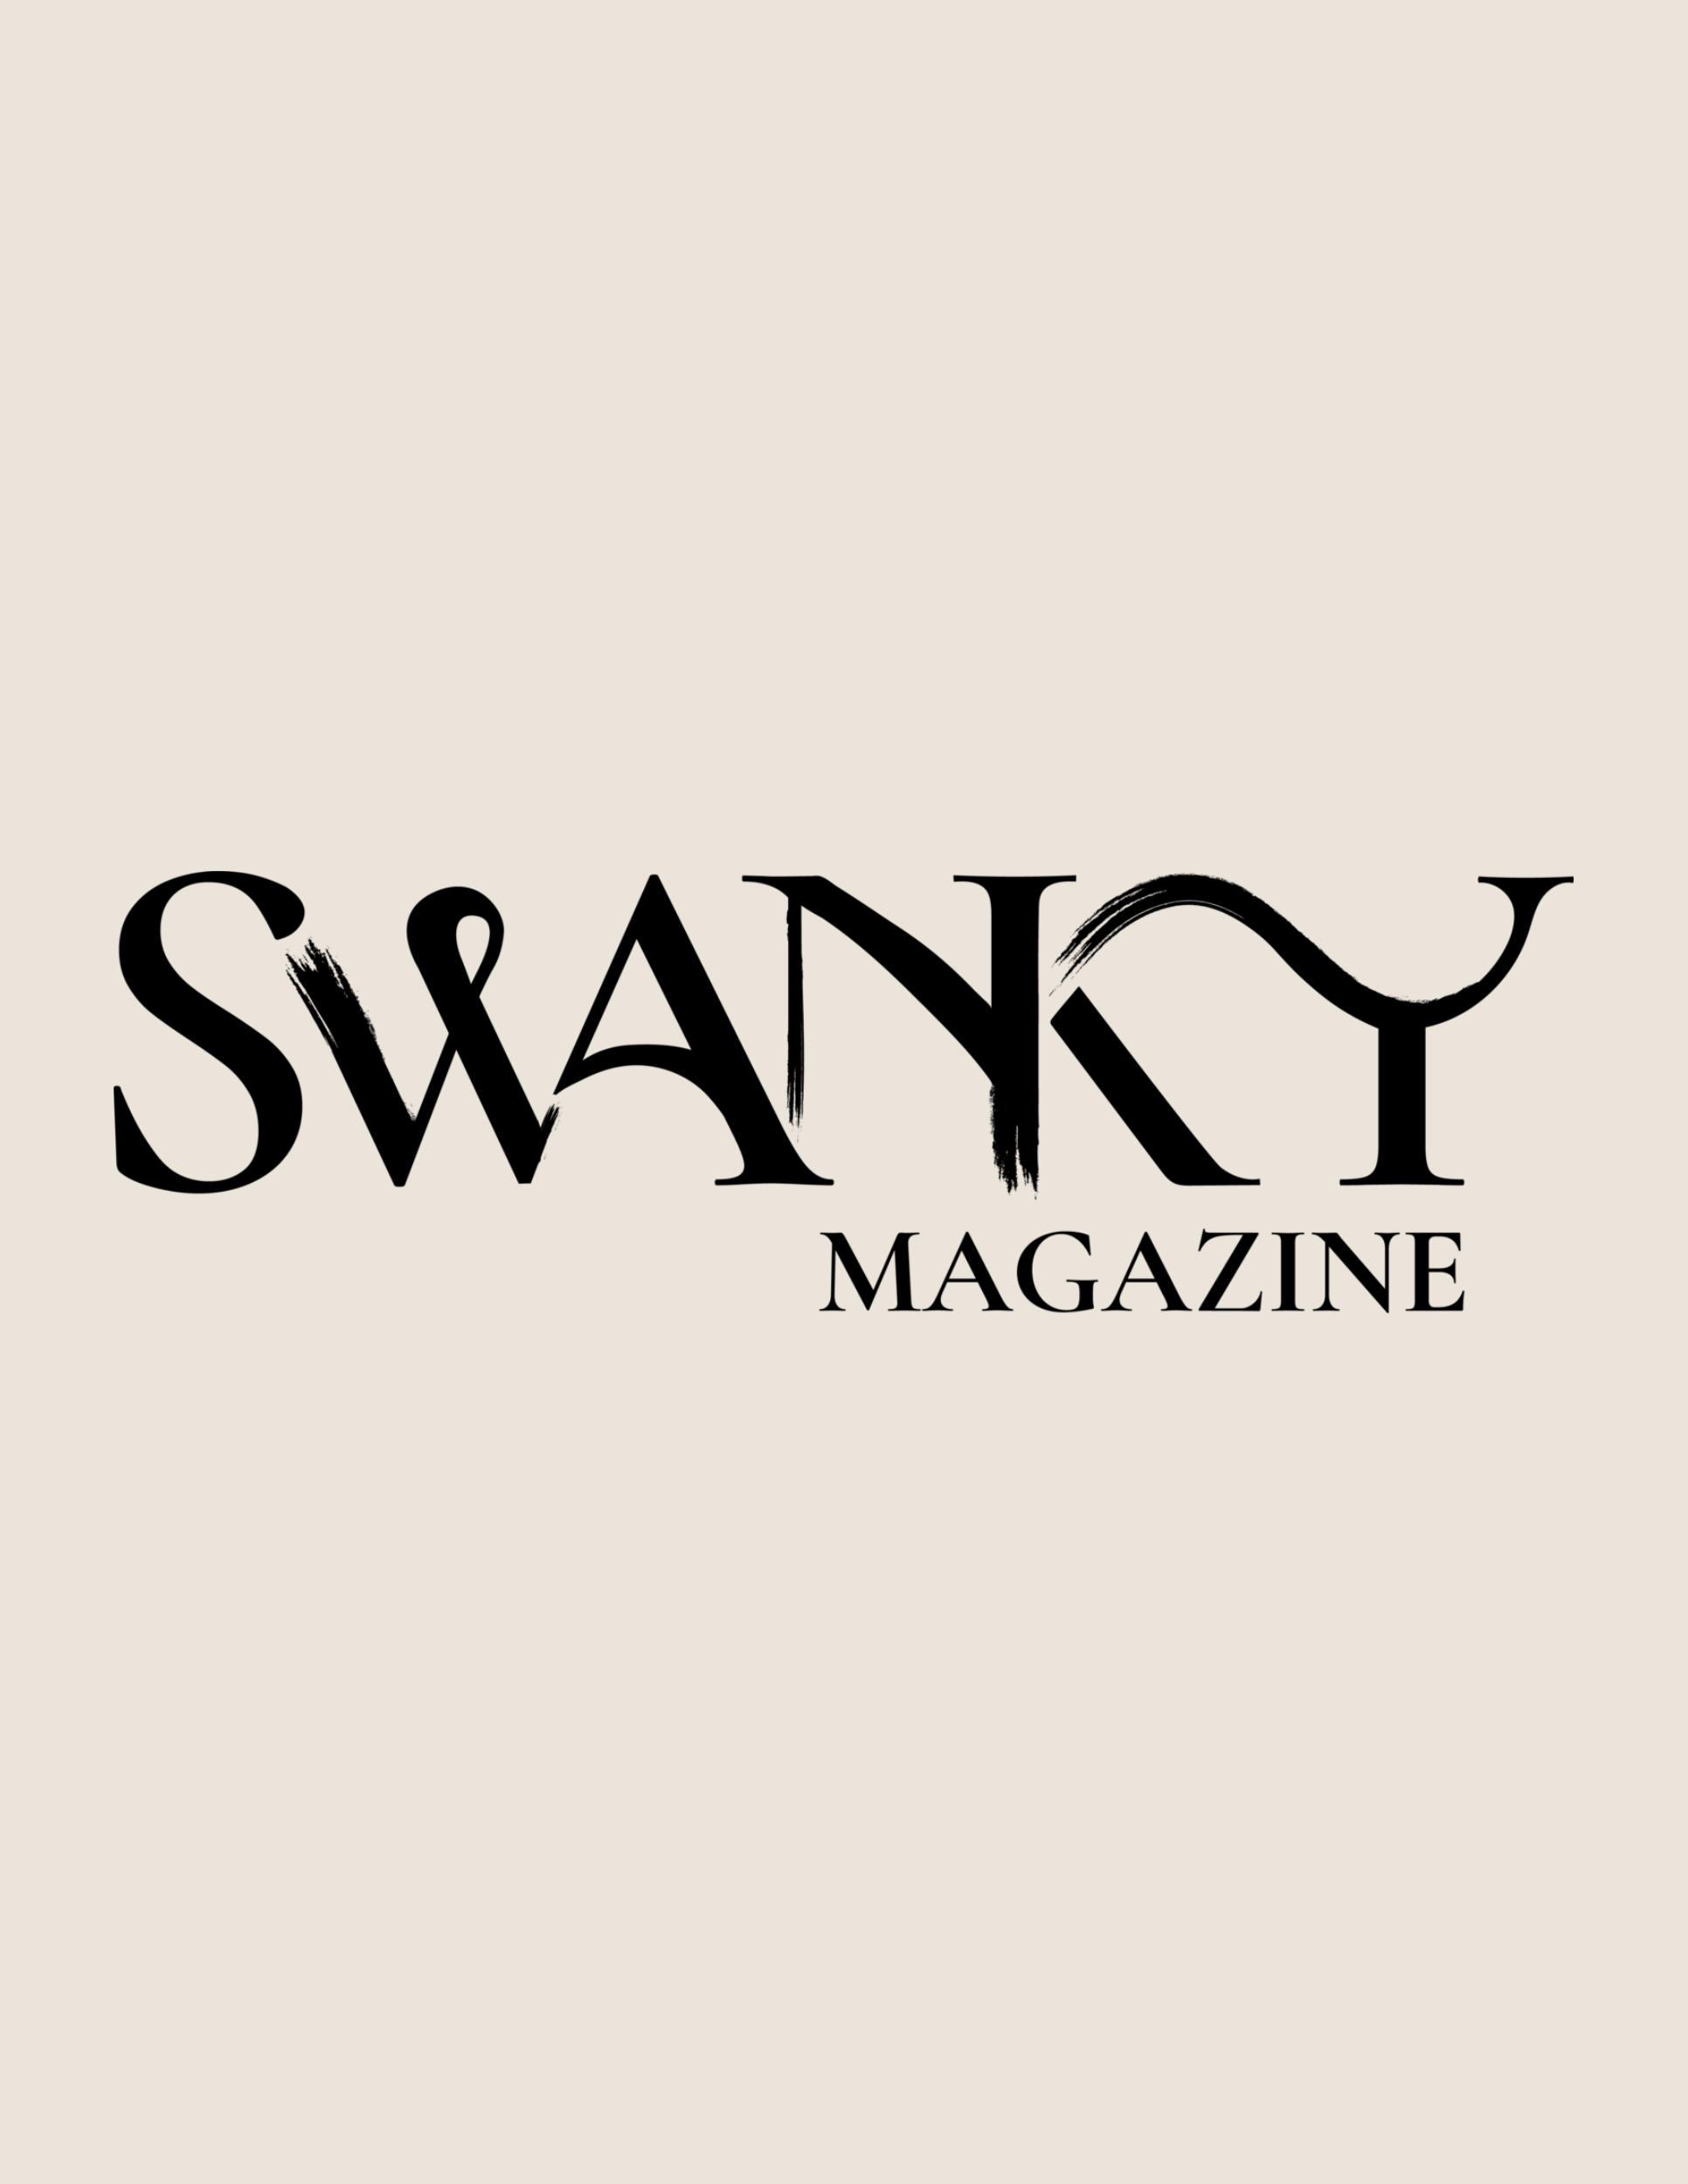 Swanky Magazine - Greater London, United Kingdom